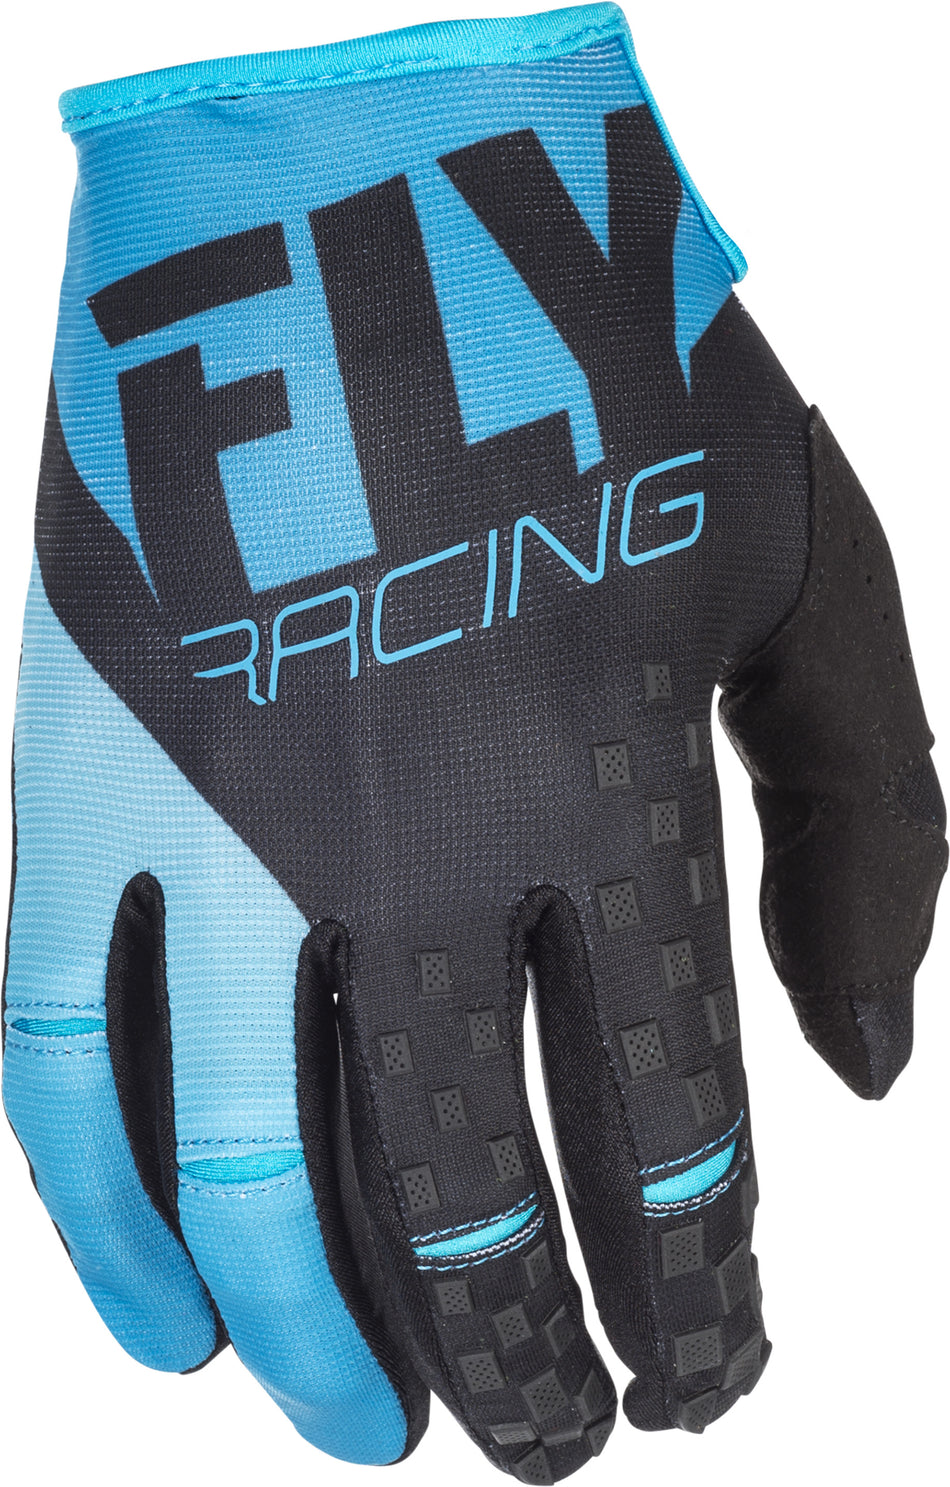 FLY RACING Kinetic Gloves Blue/Black Sz 5 371-41105